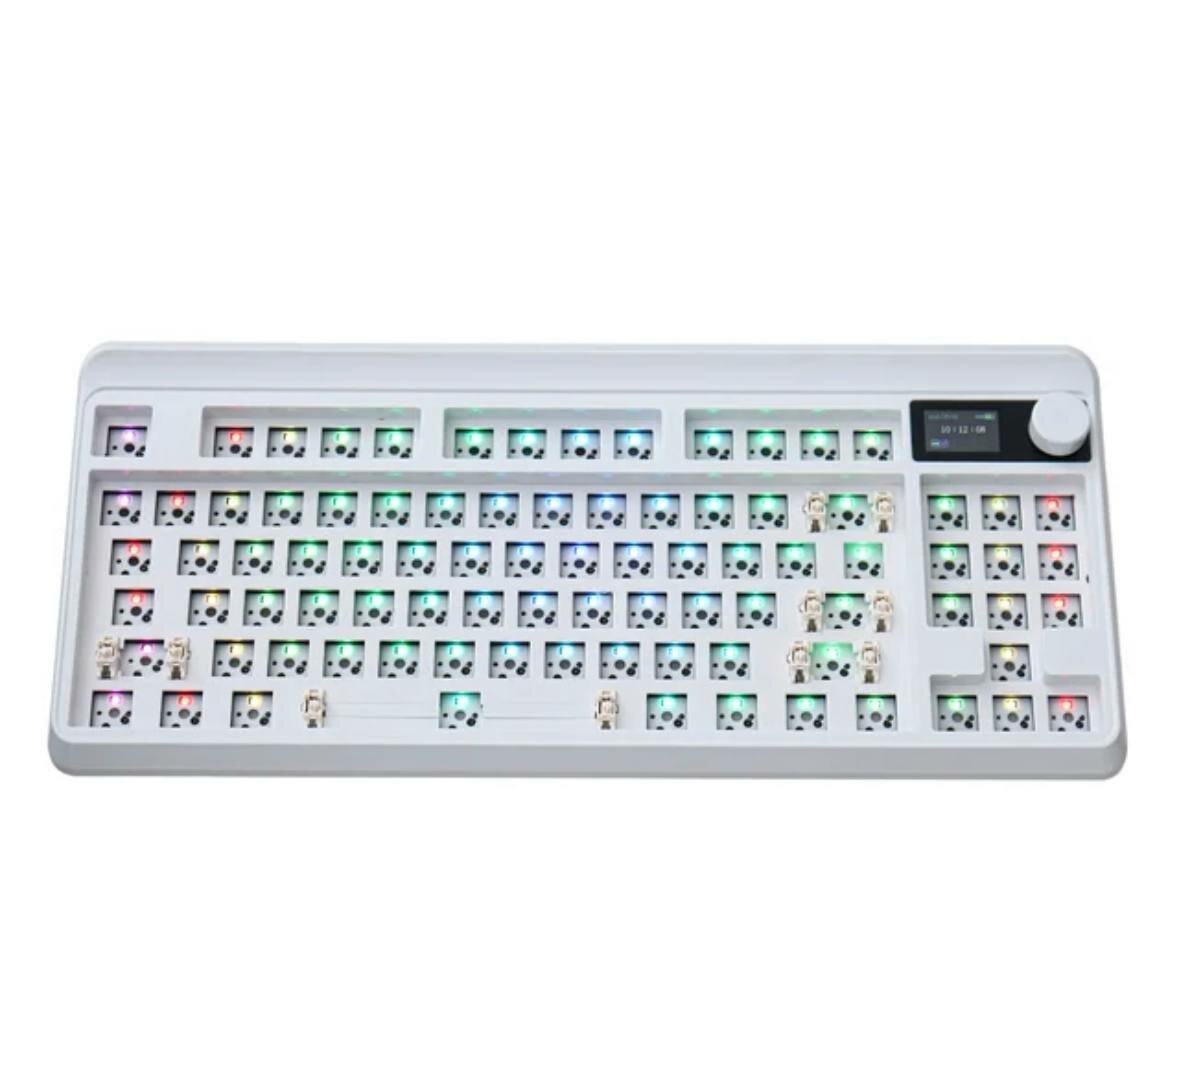 База для клавиатуры c oled экраном yk830